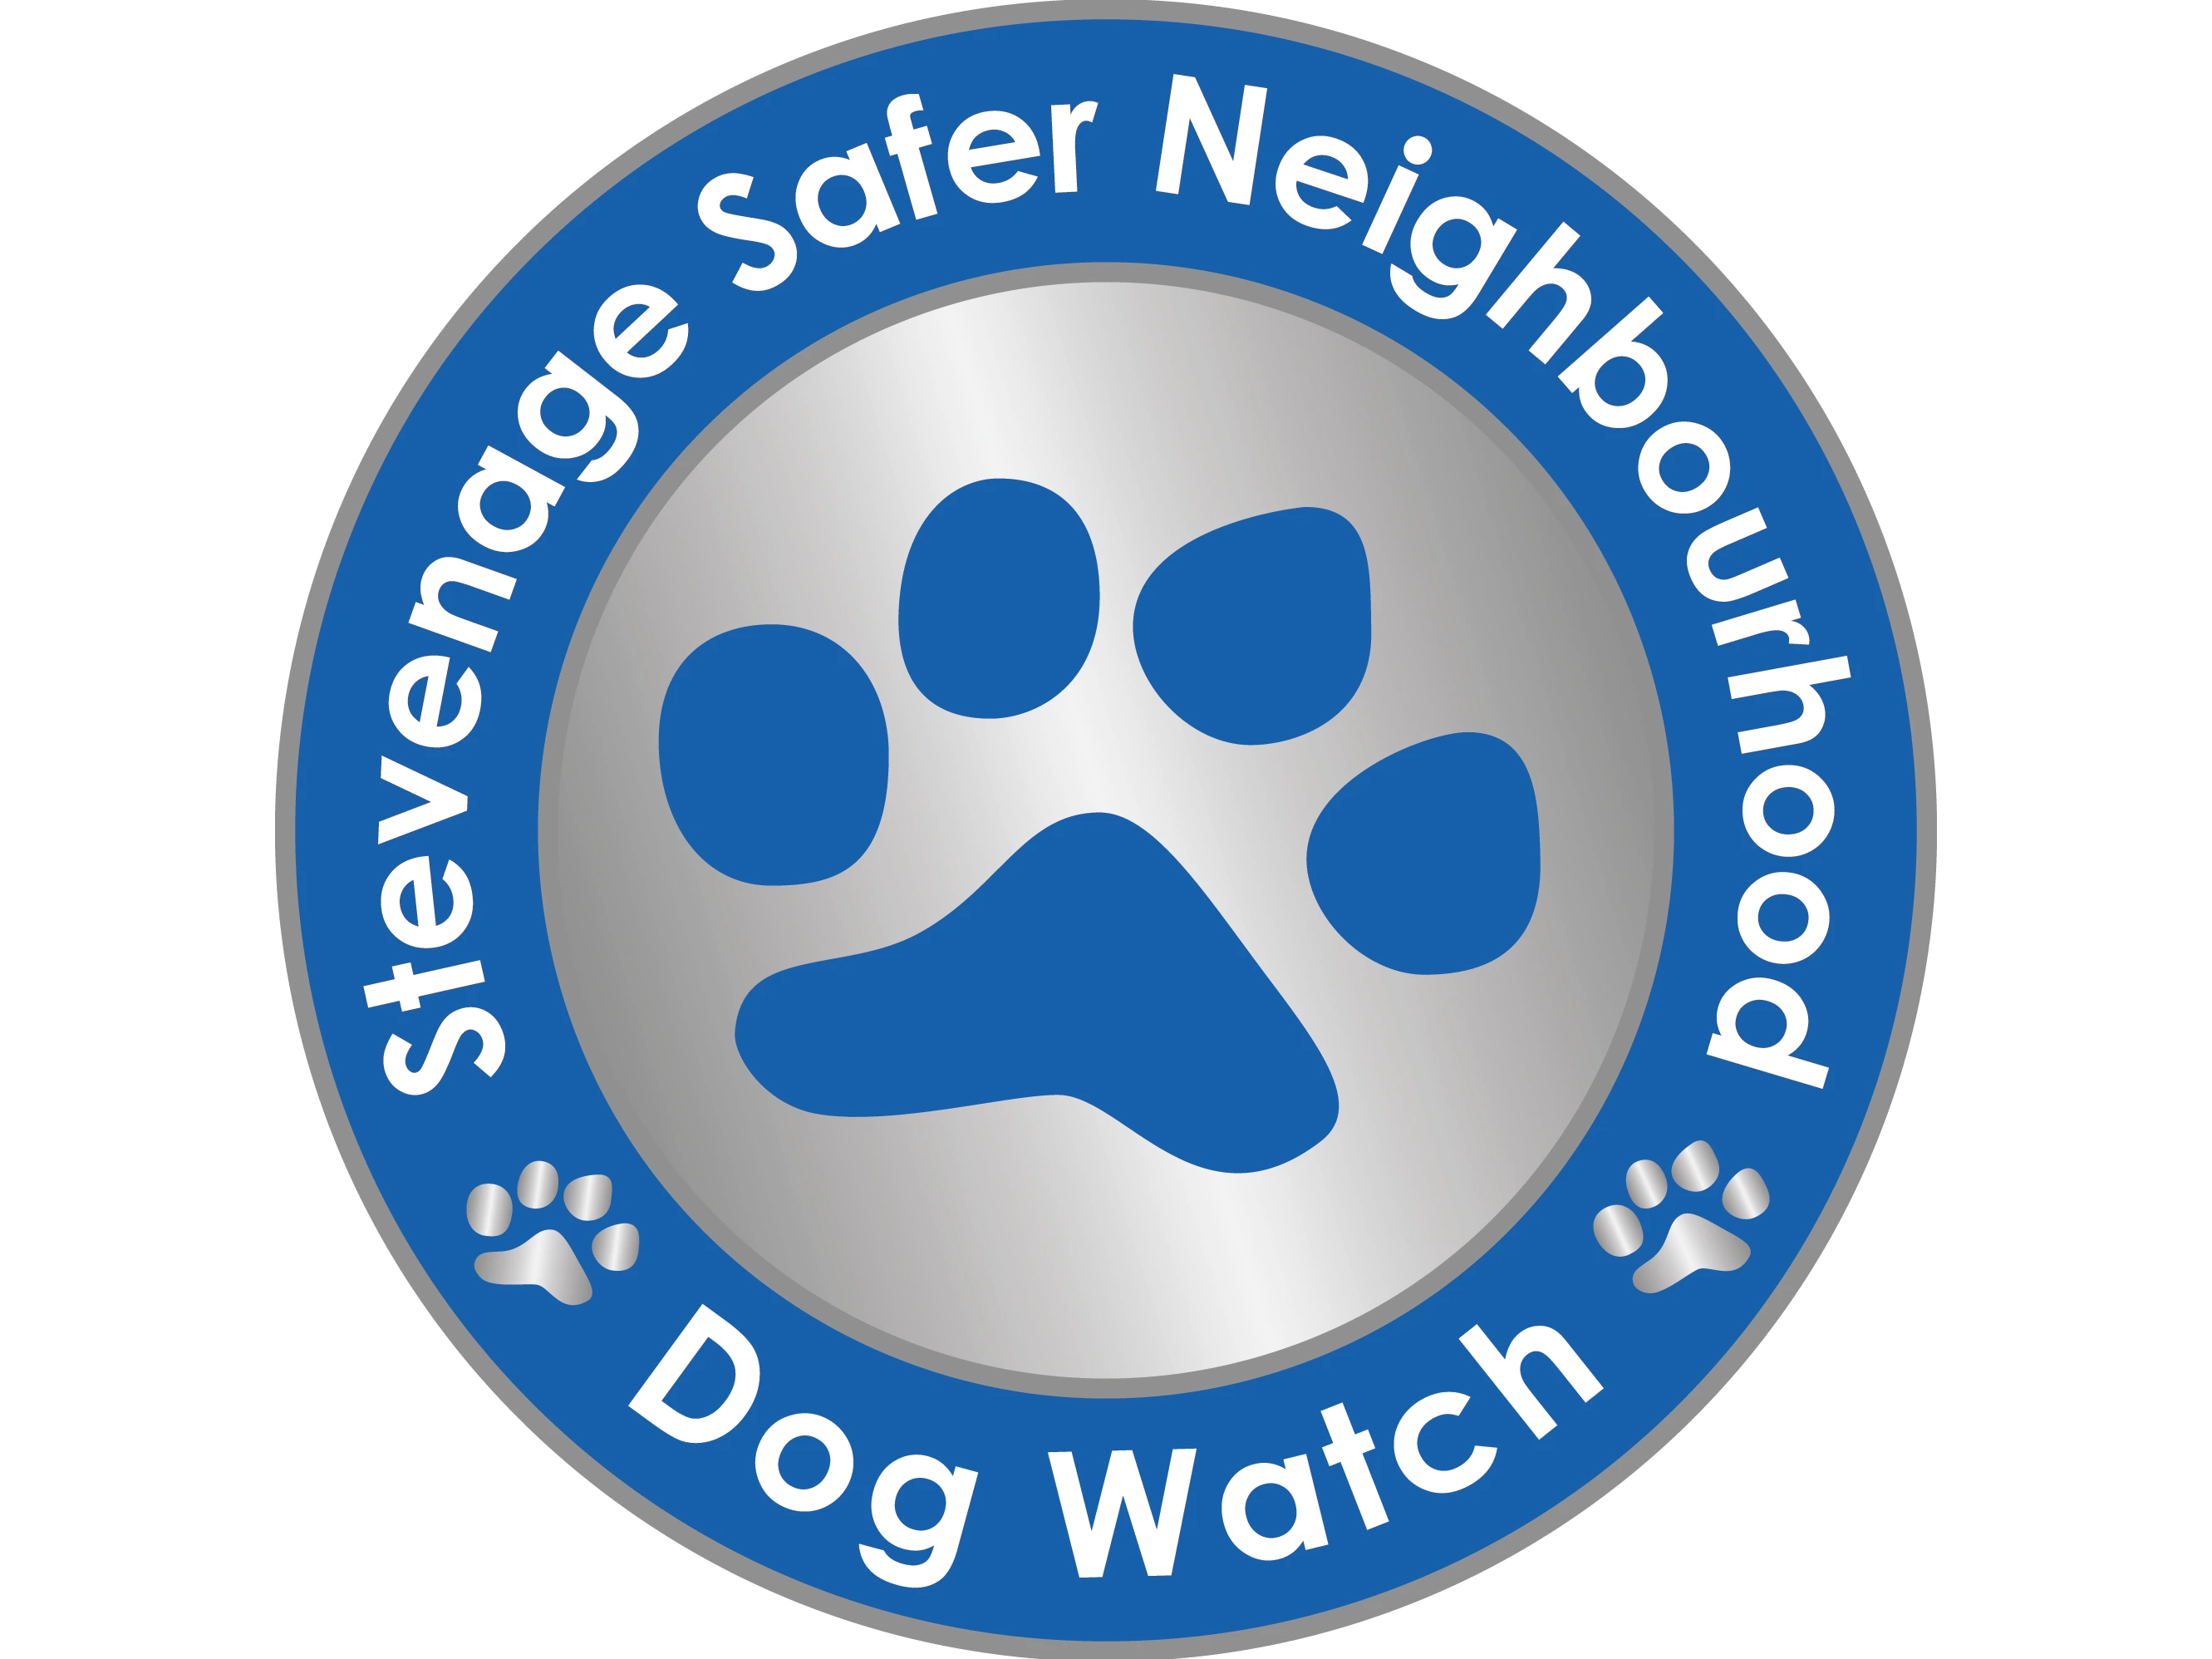 Dog Watch, St Nicholas Park, Stevenage